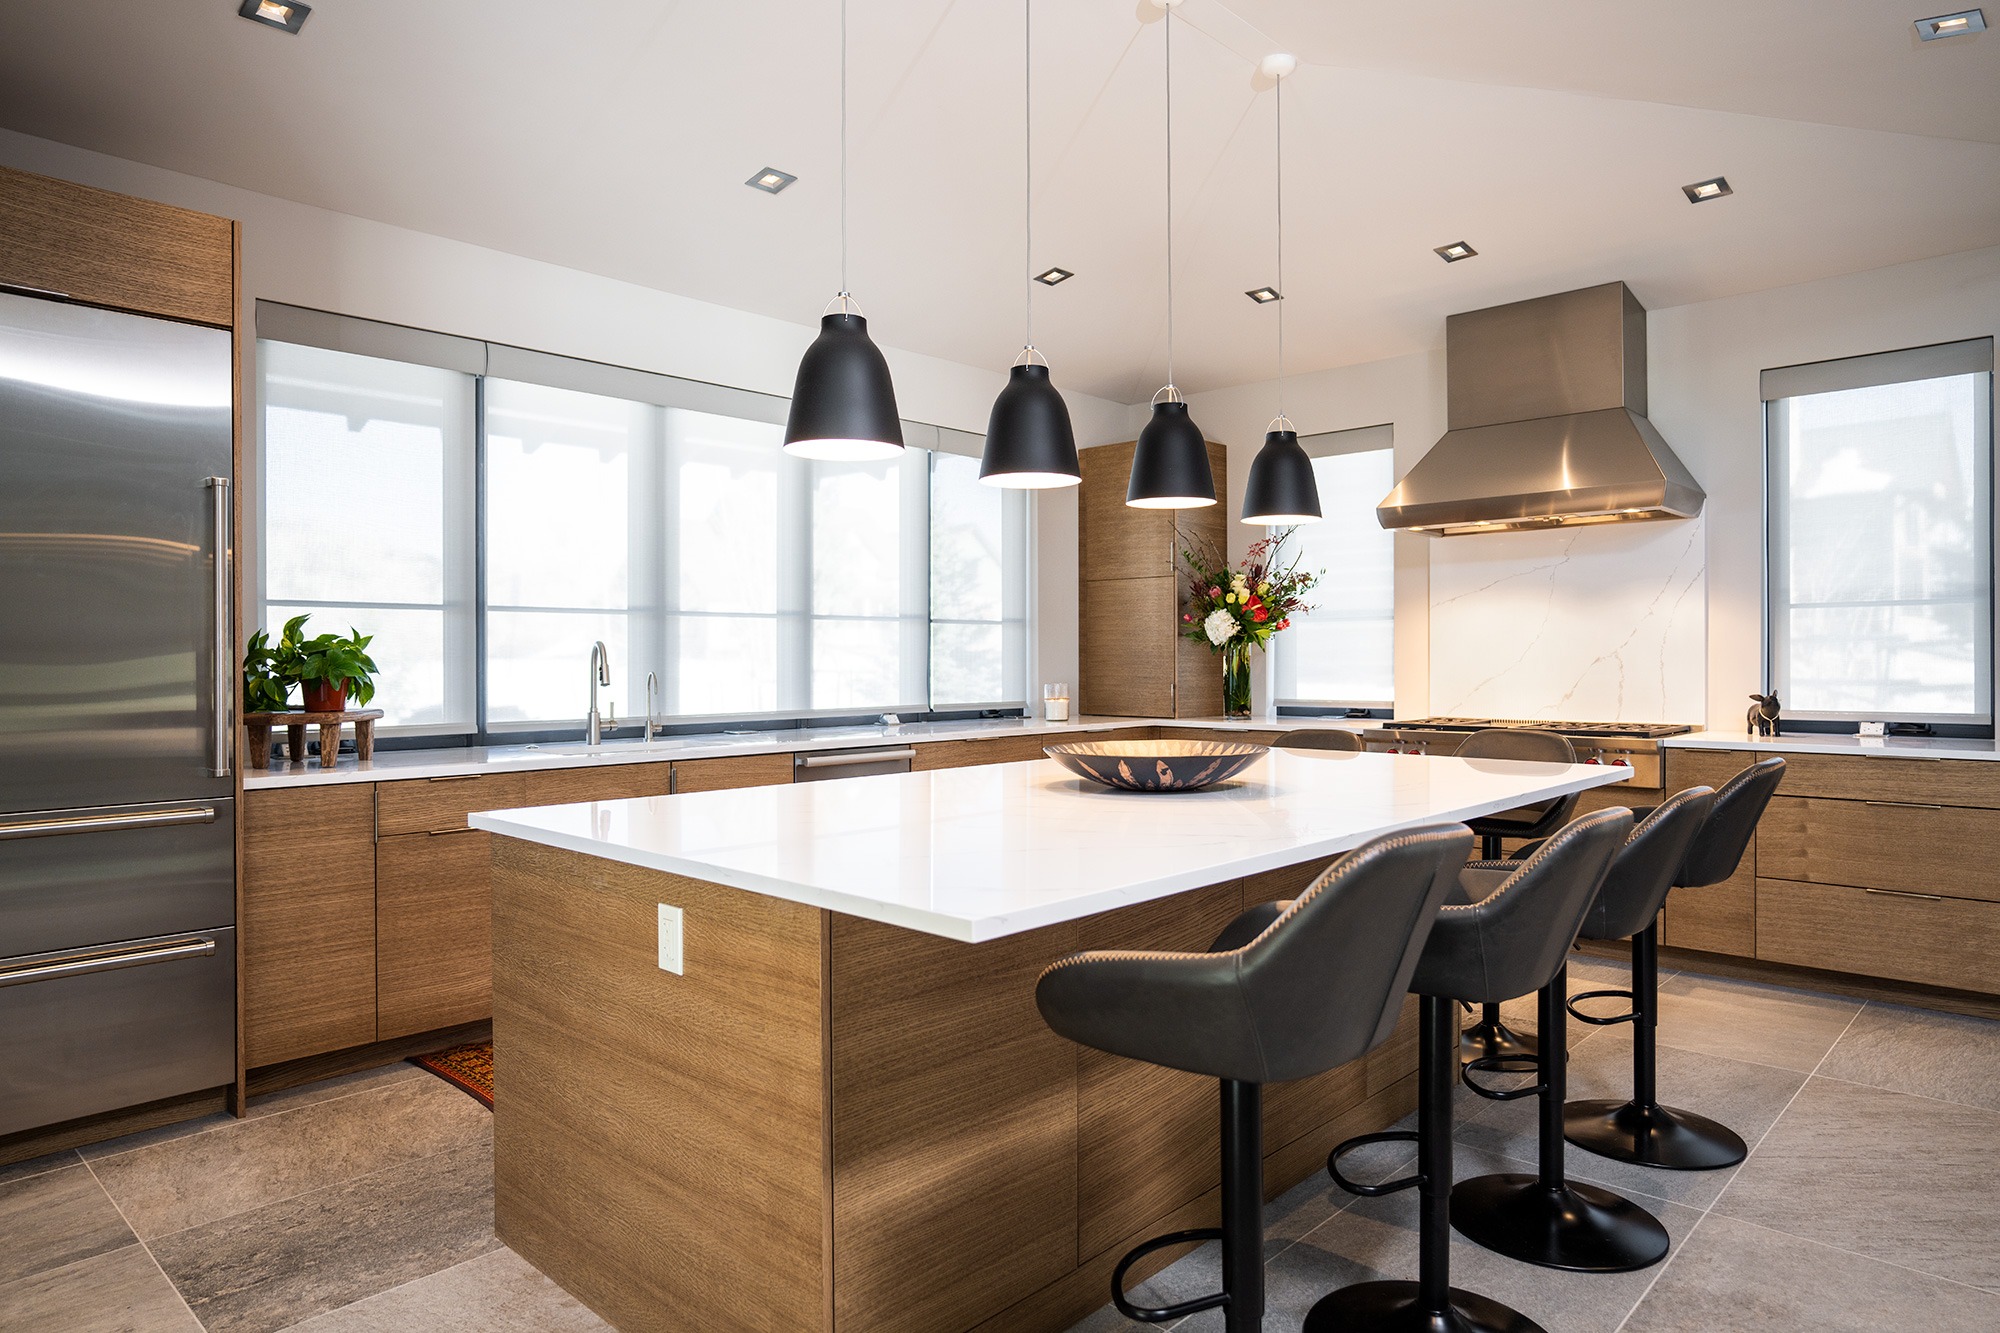 BJD custom home kitchen angled shot with barstools and black pendants